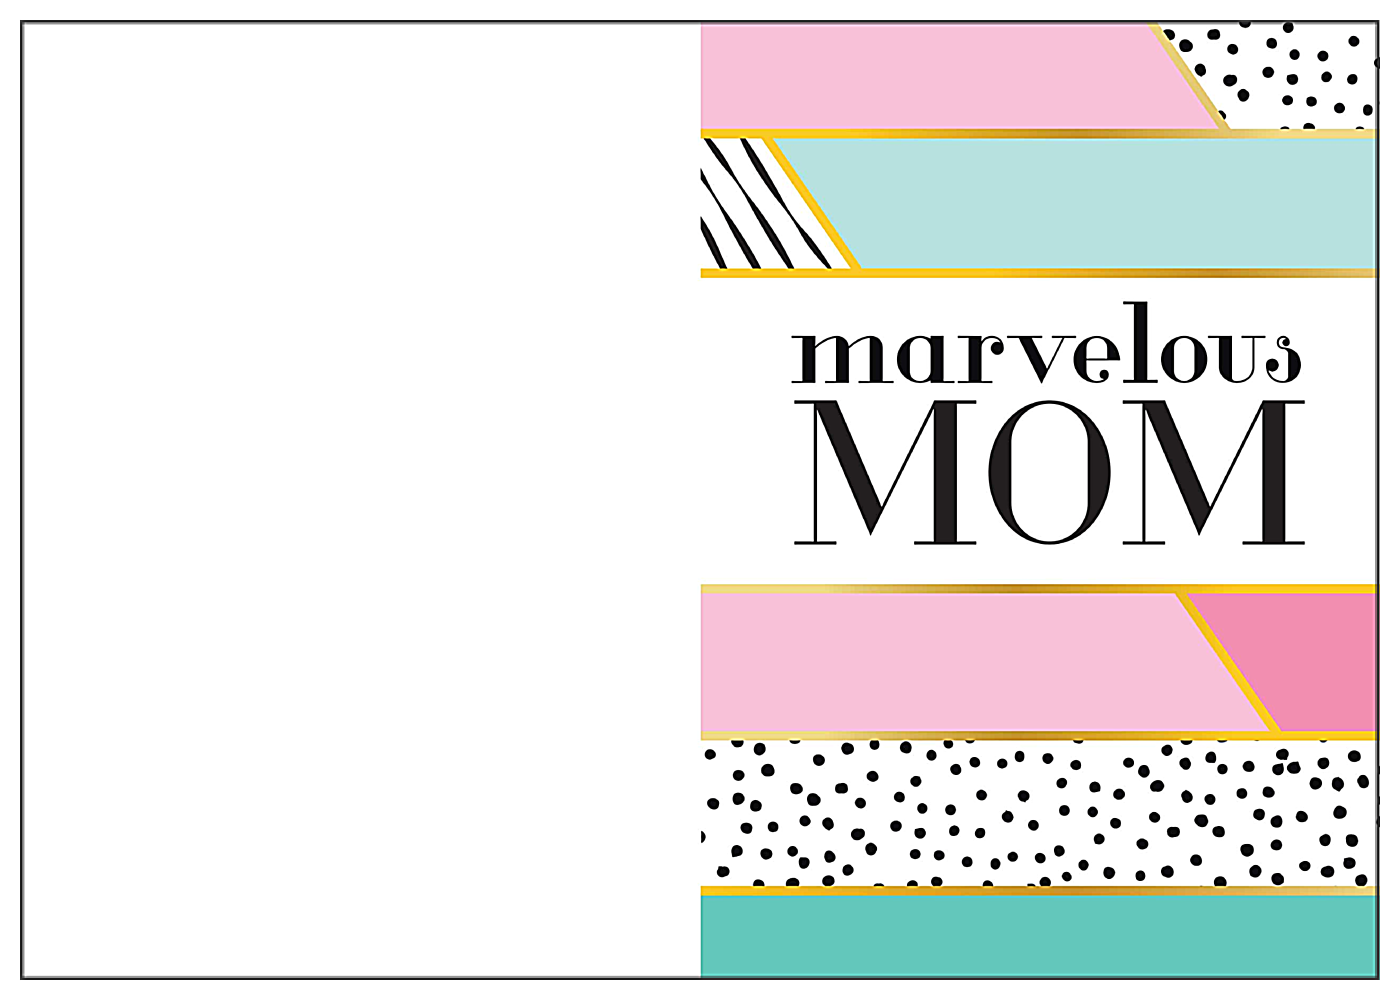 Marvelous Mom front - Greeting Cards Maker